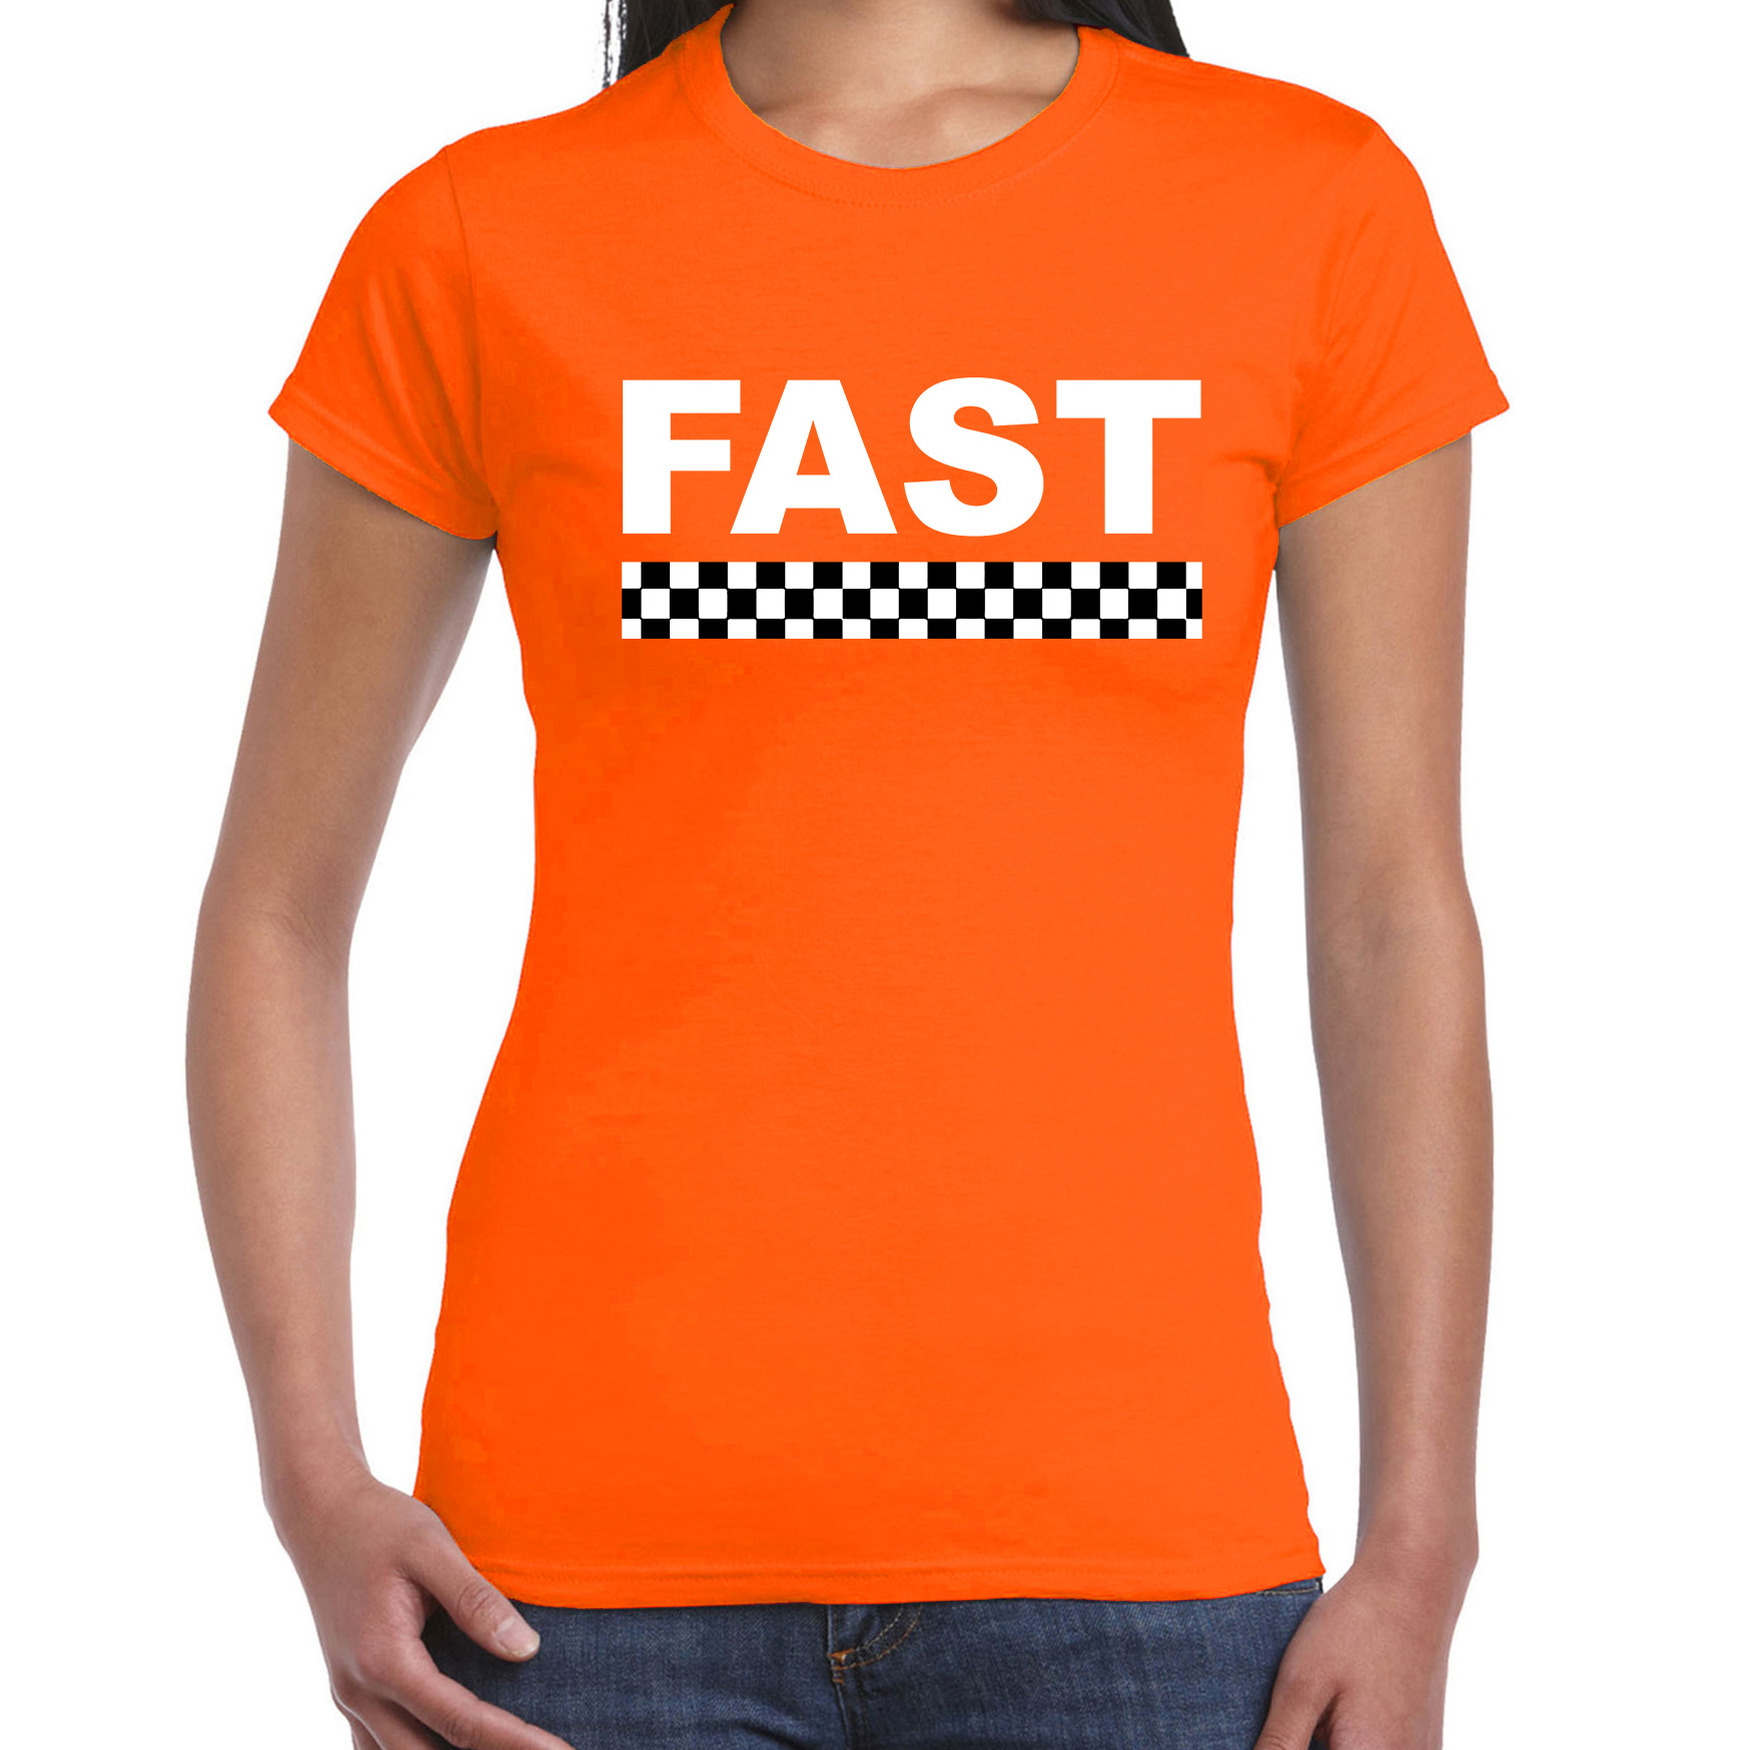 Fast coureur supporter finish vlag t shirt oranje voor dames race autosport motorsport thema race supporter met finish vlag